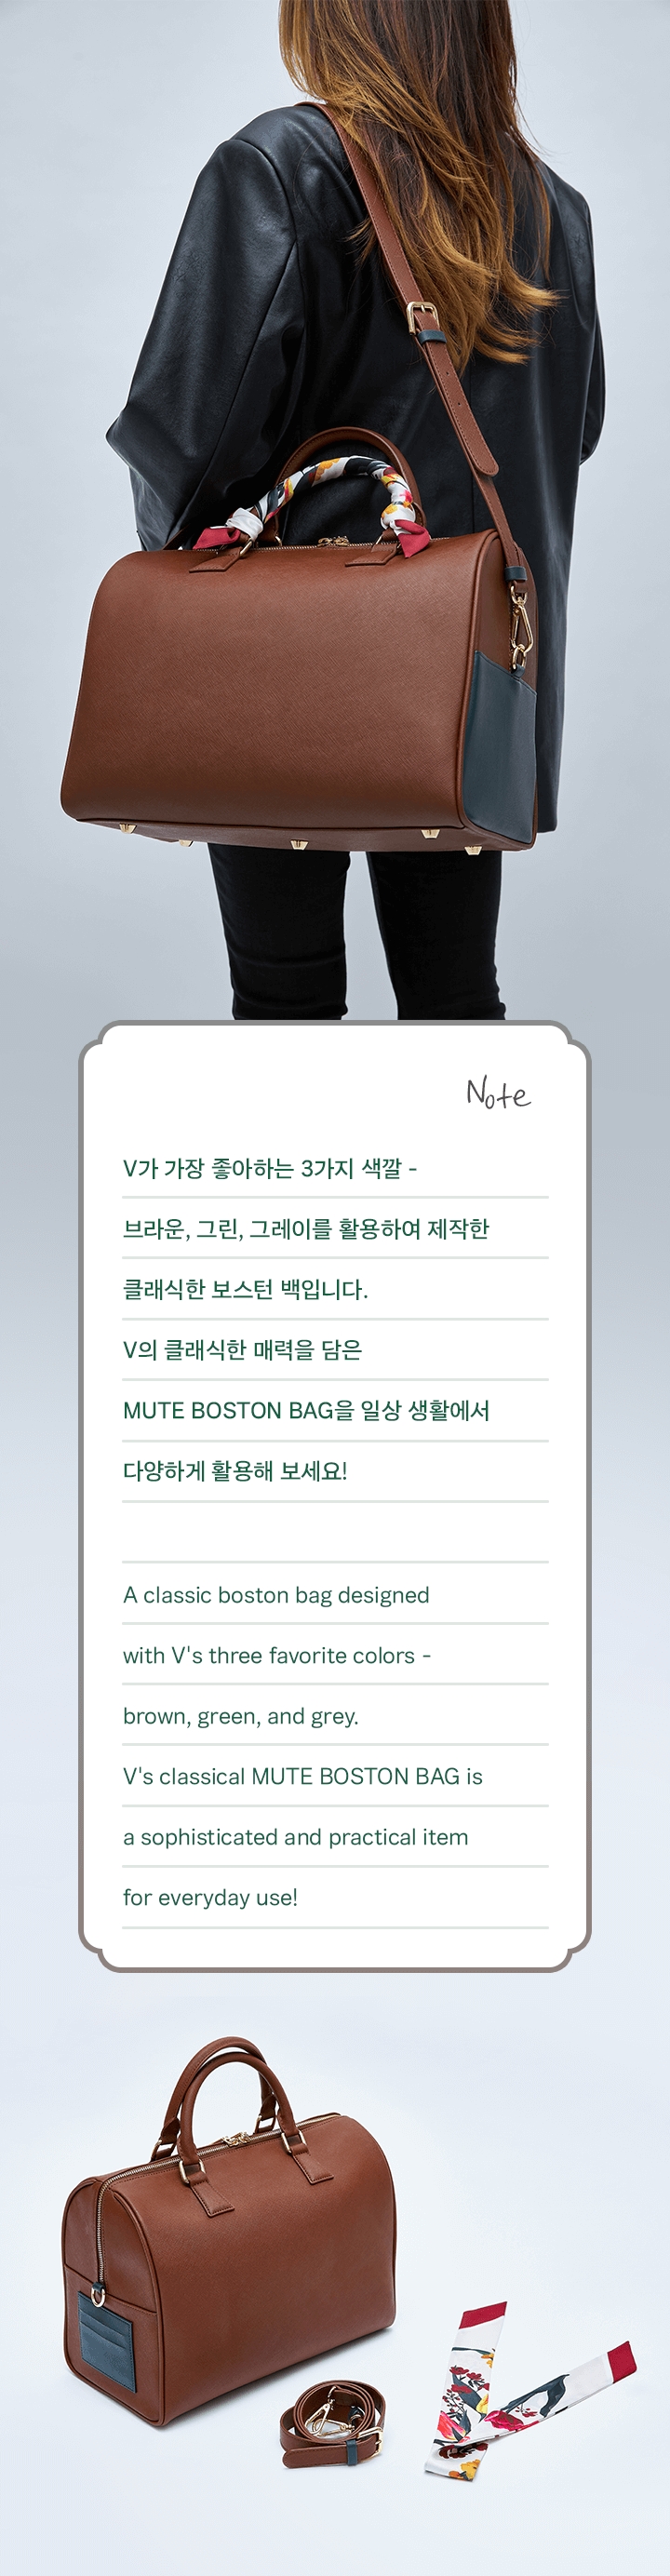 BTS V Mute Boston Bag – Kpop Exchange